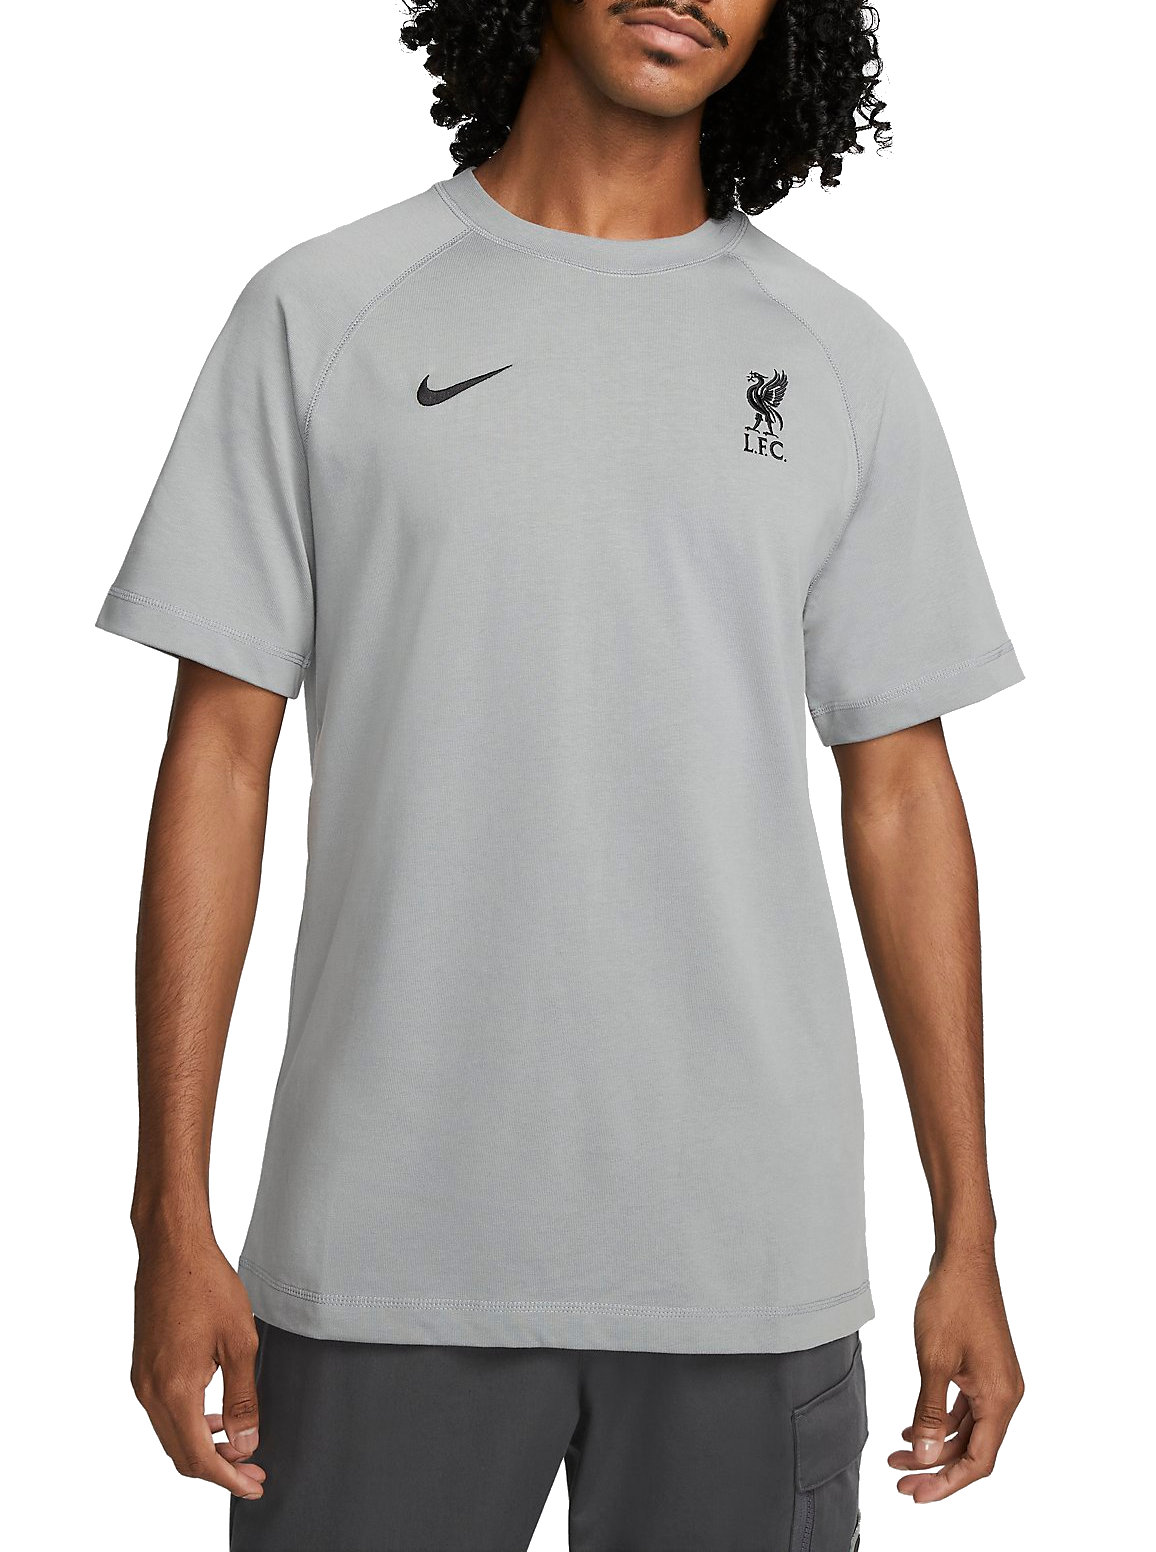 T-shirt Nike LFC M NK TRAVEL TOP SS AW